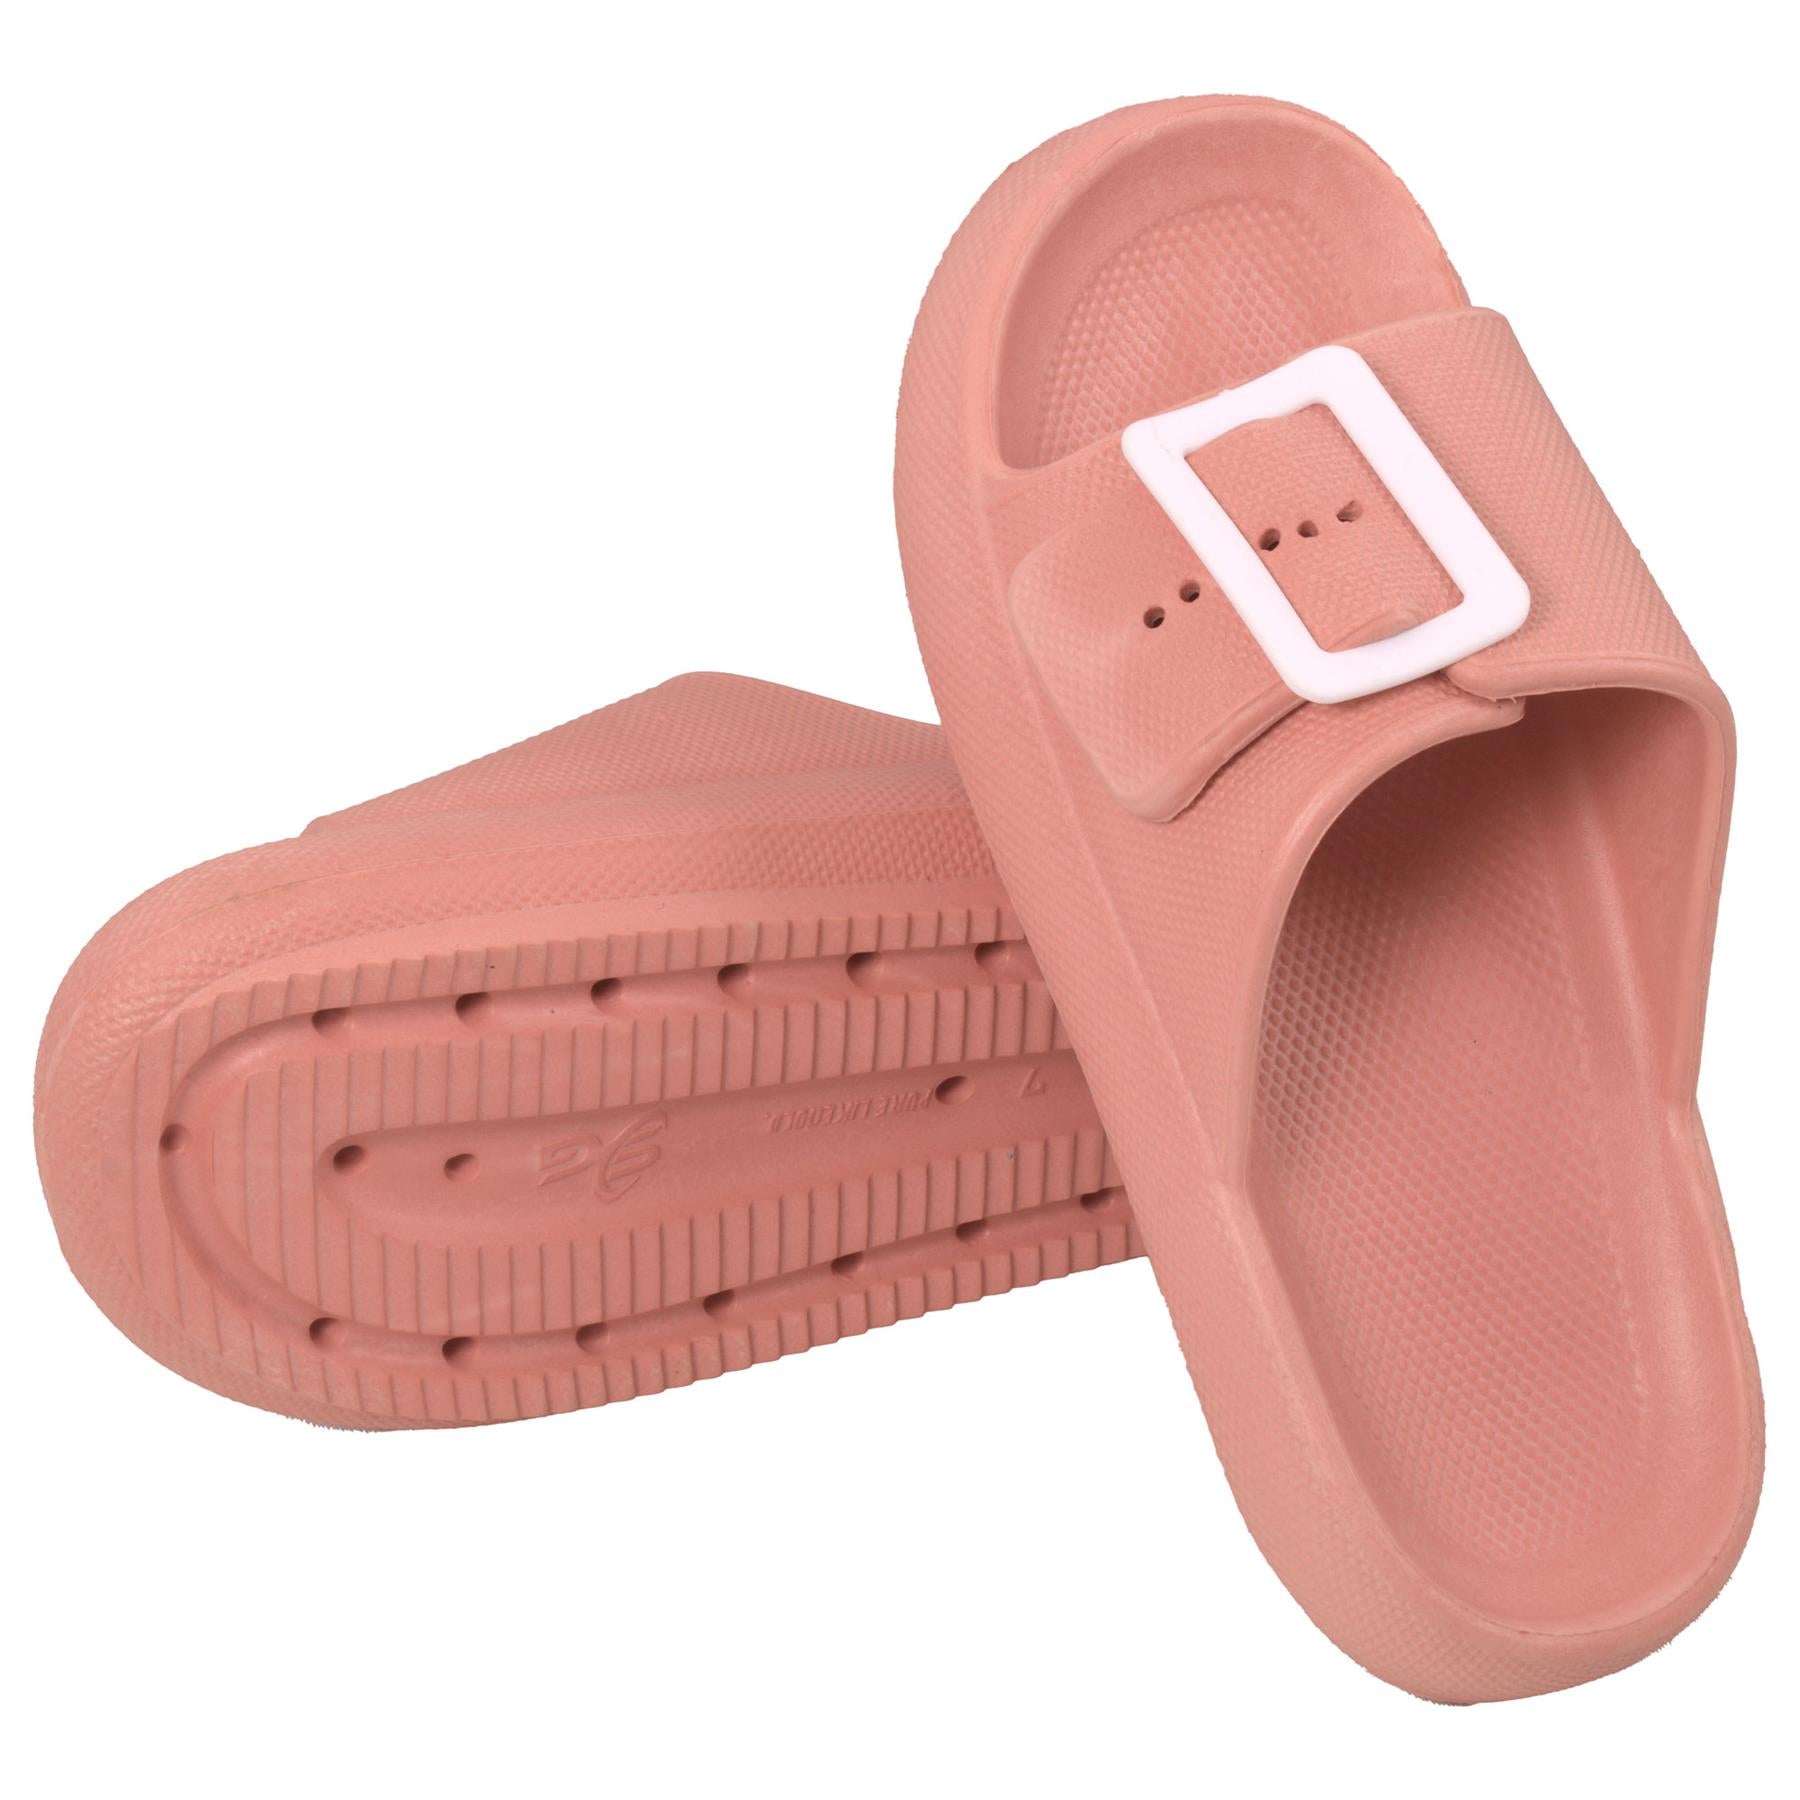 Women Cloud Sliders Soft Slide Sandals with Adjustable Buckle Open Toe Slippers